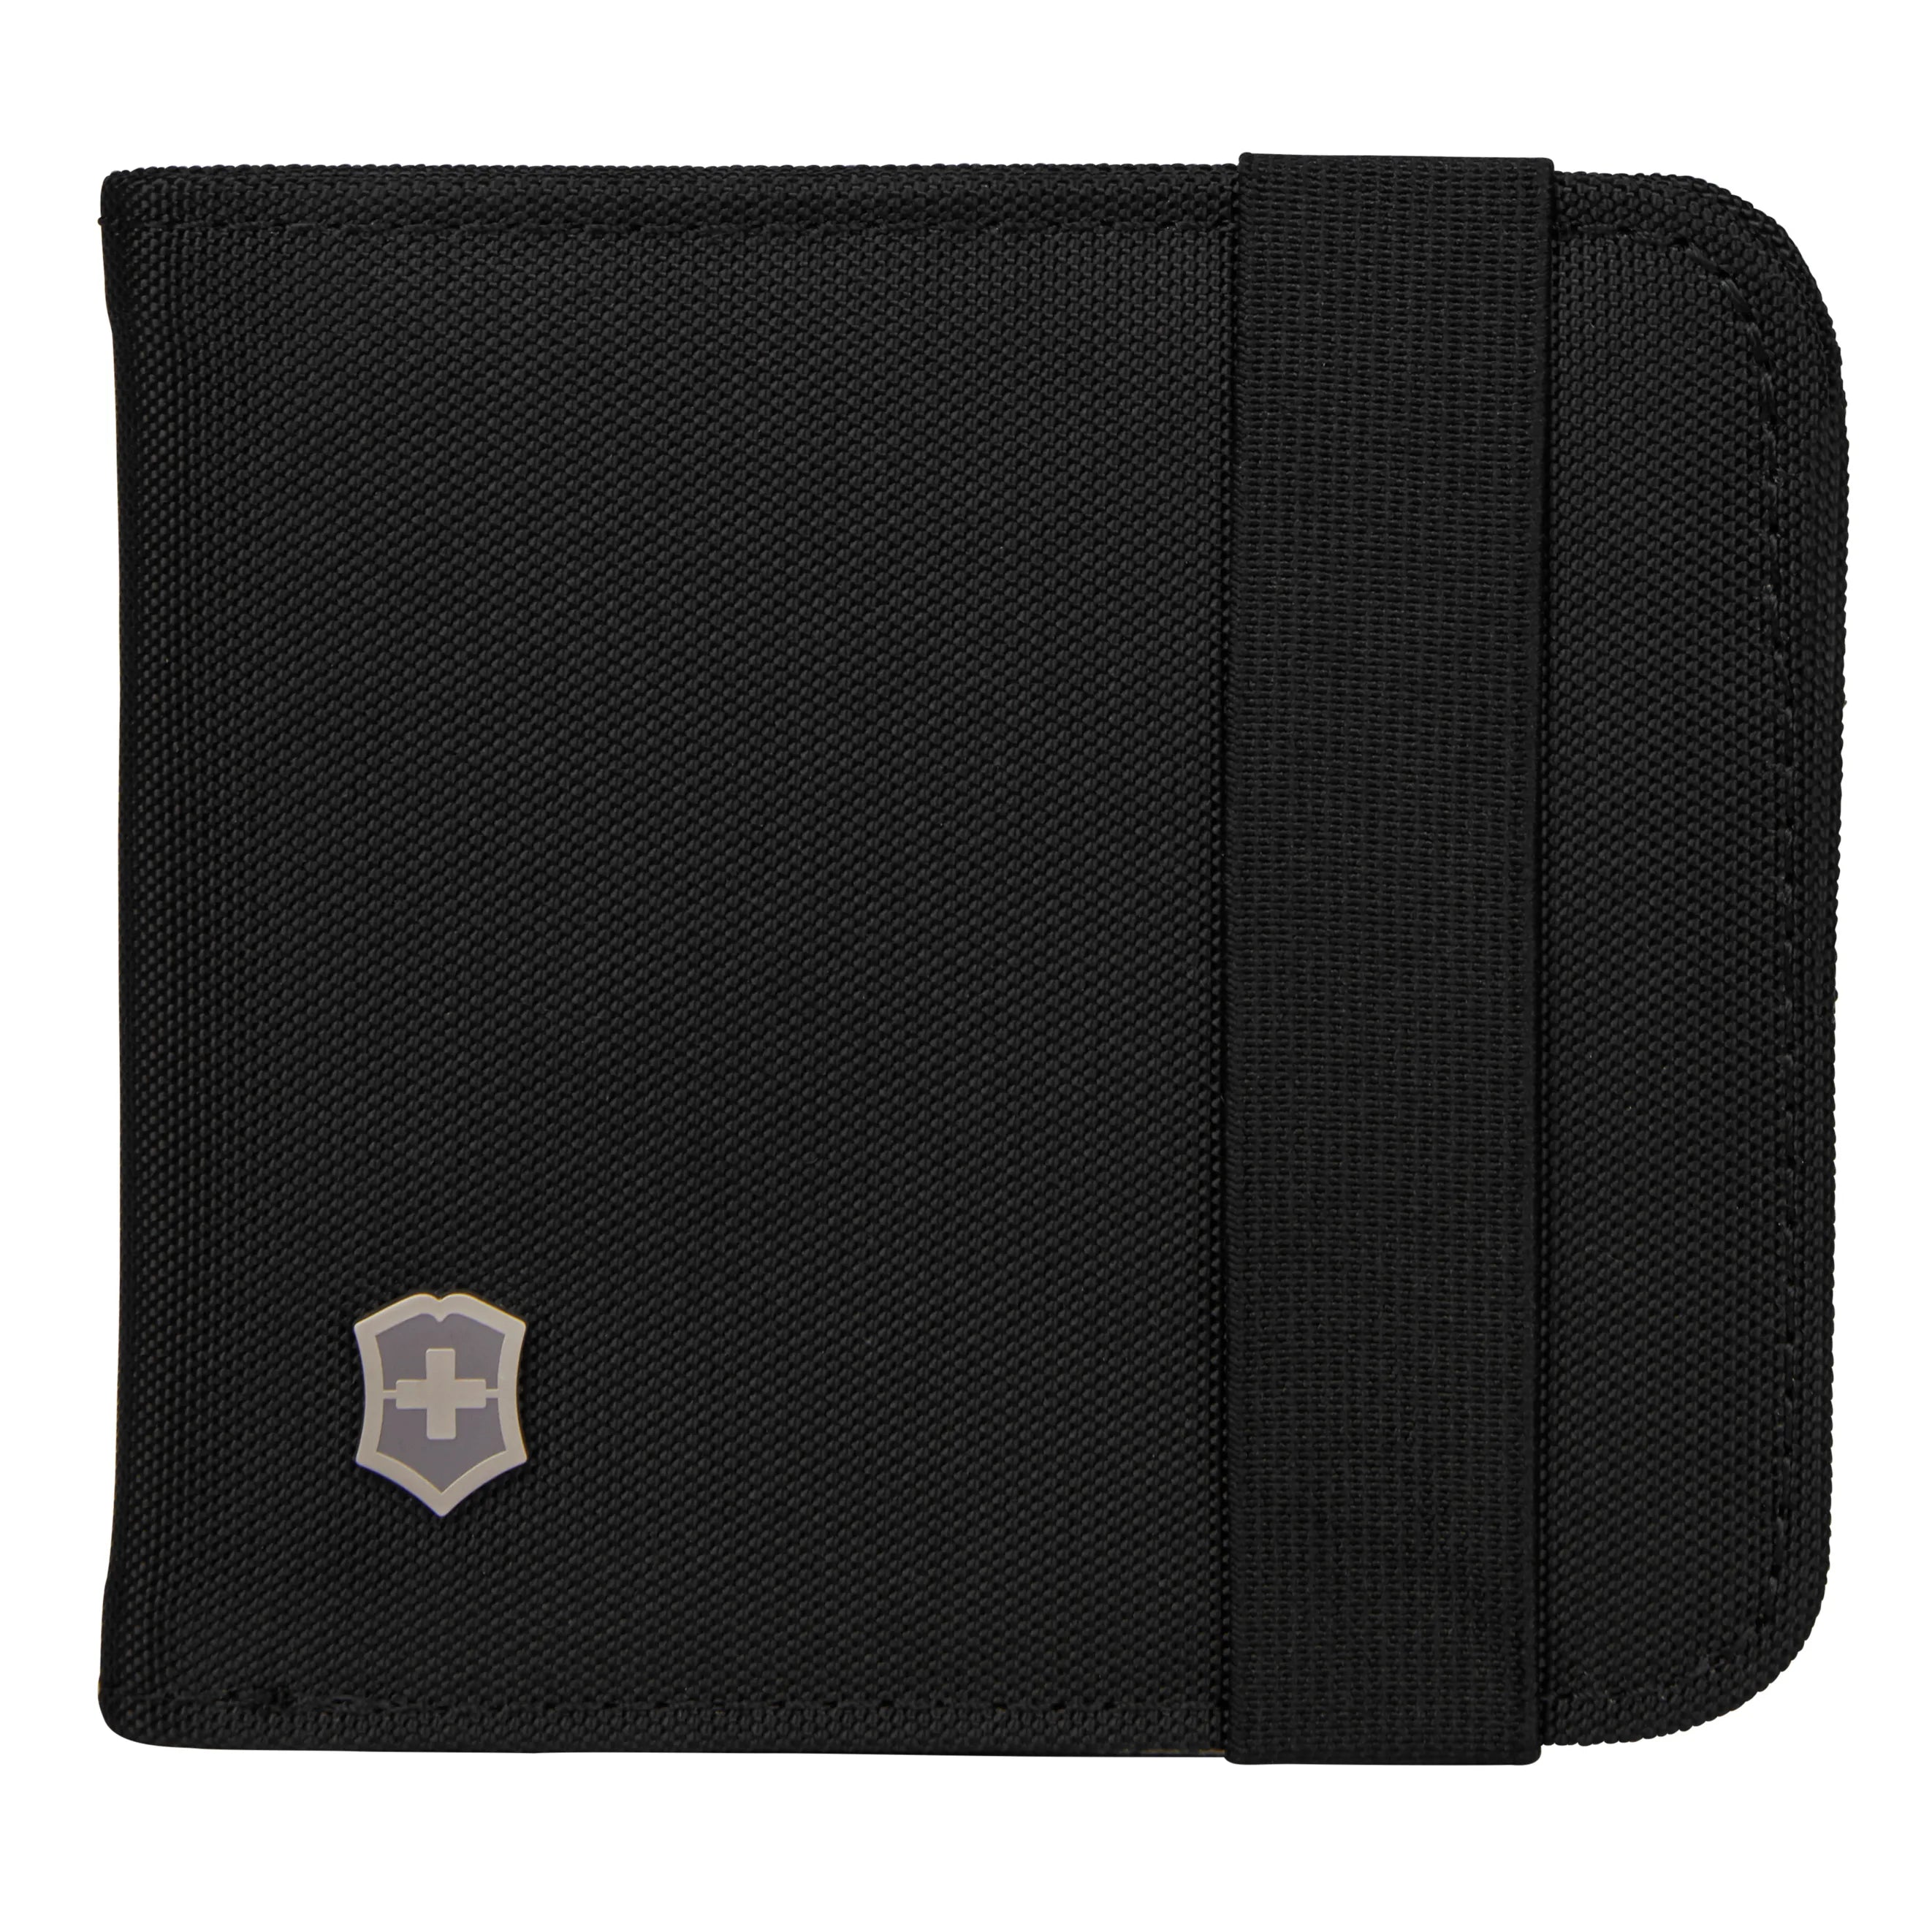 Victorinox Travel Accessories 5.0 Bi-Fold Wallet 11 cm - Black